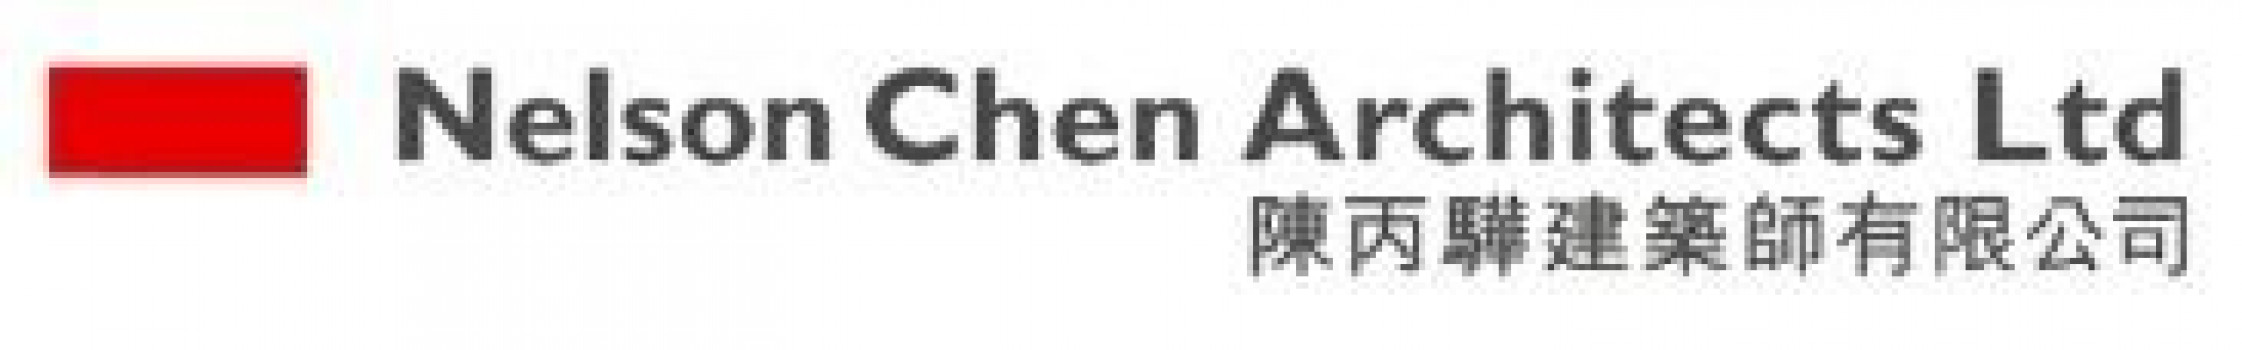 Nelson Chen Architects Ltd.